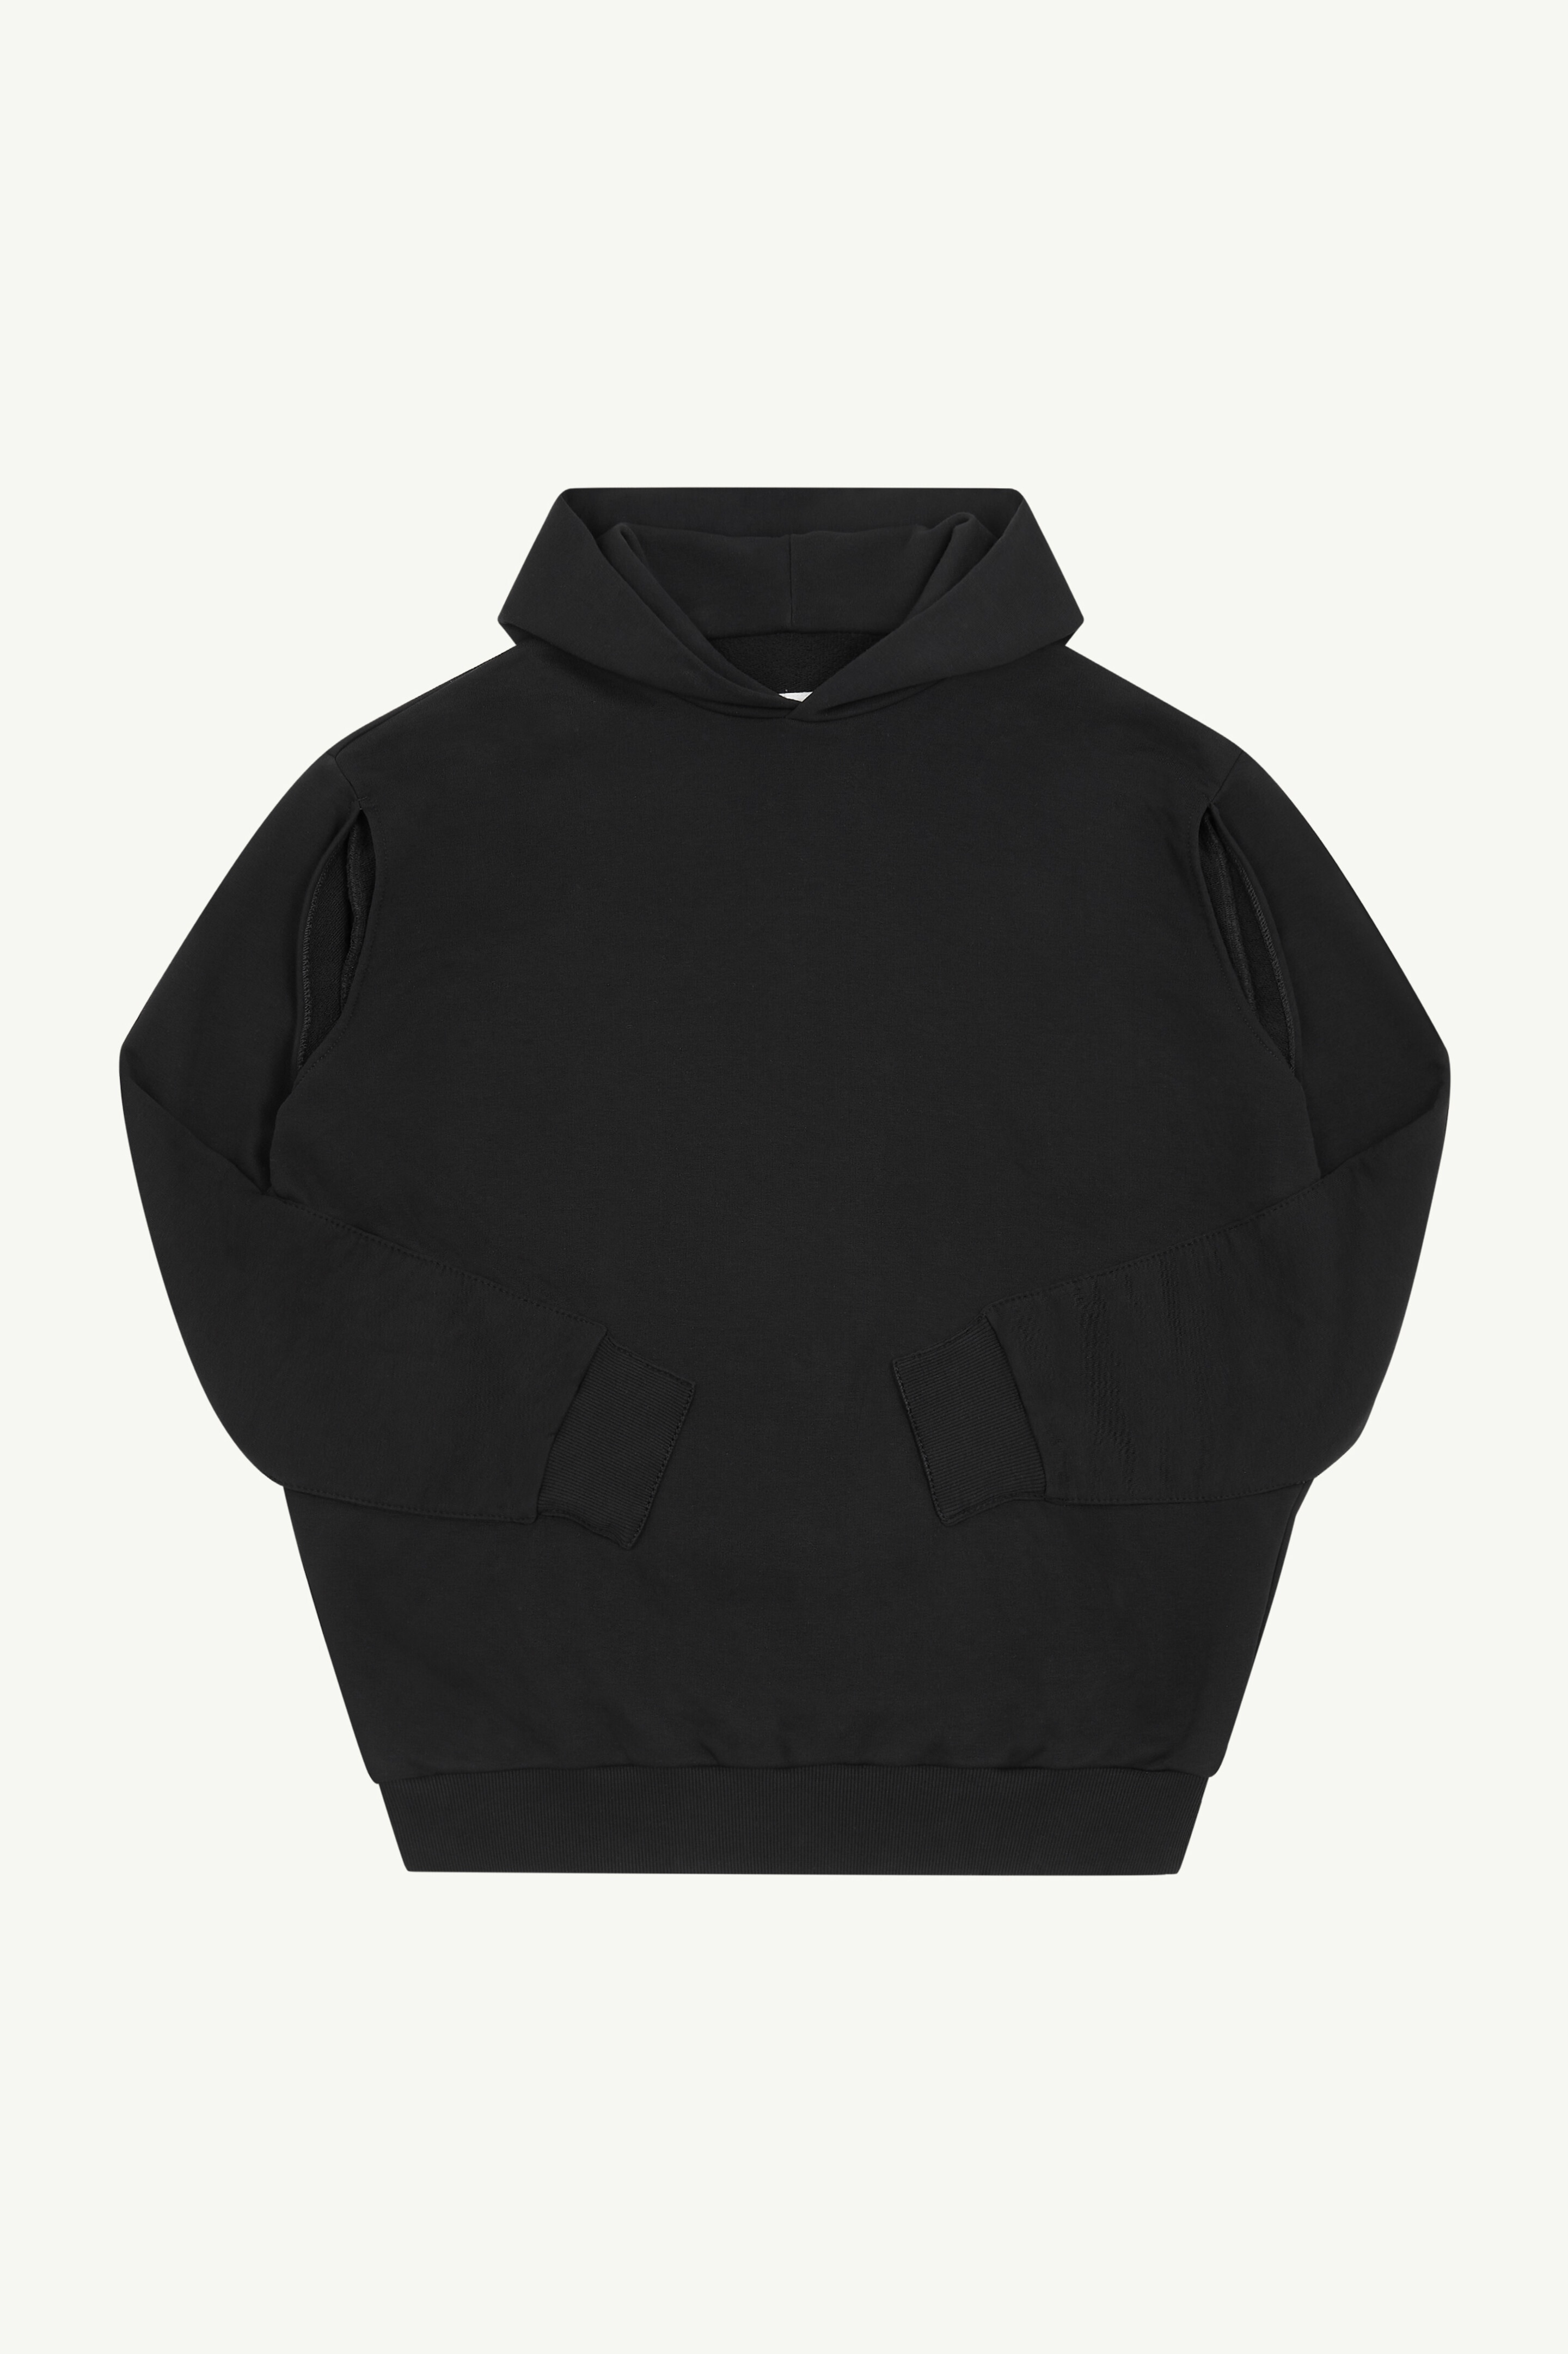 Unbrushed Jersey Hooded Sweatshirt - 1